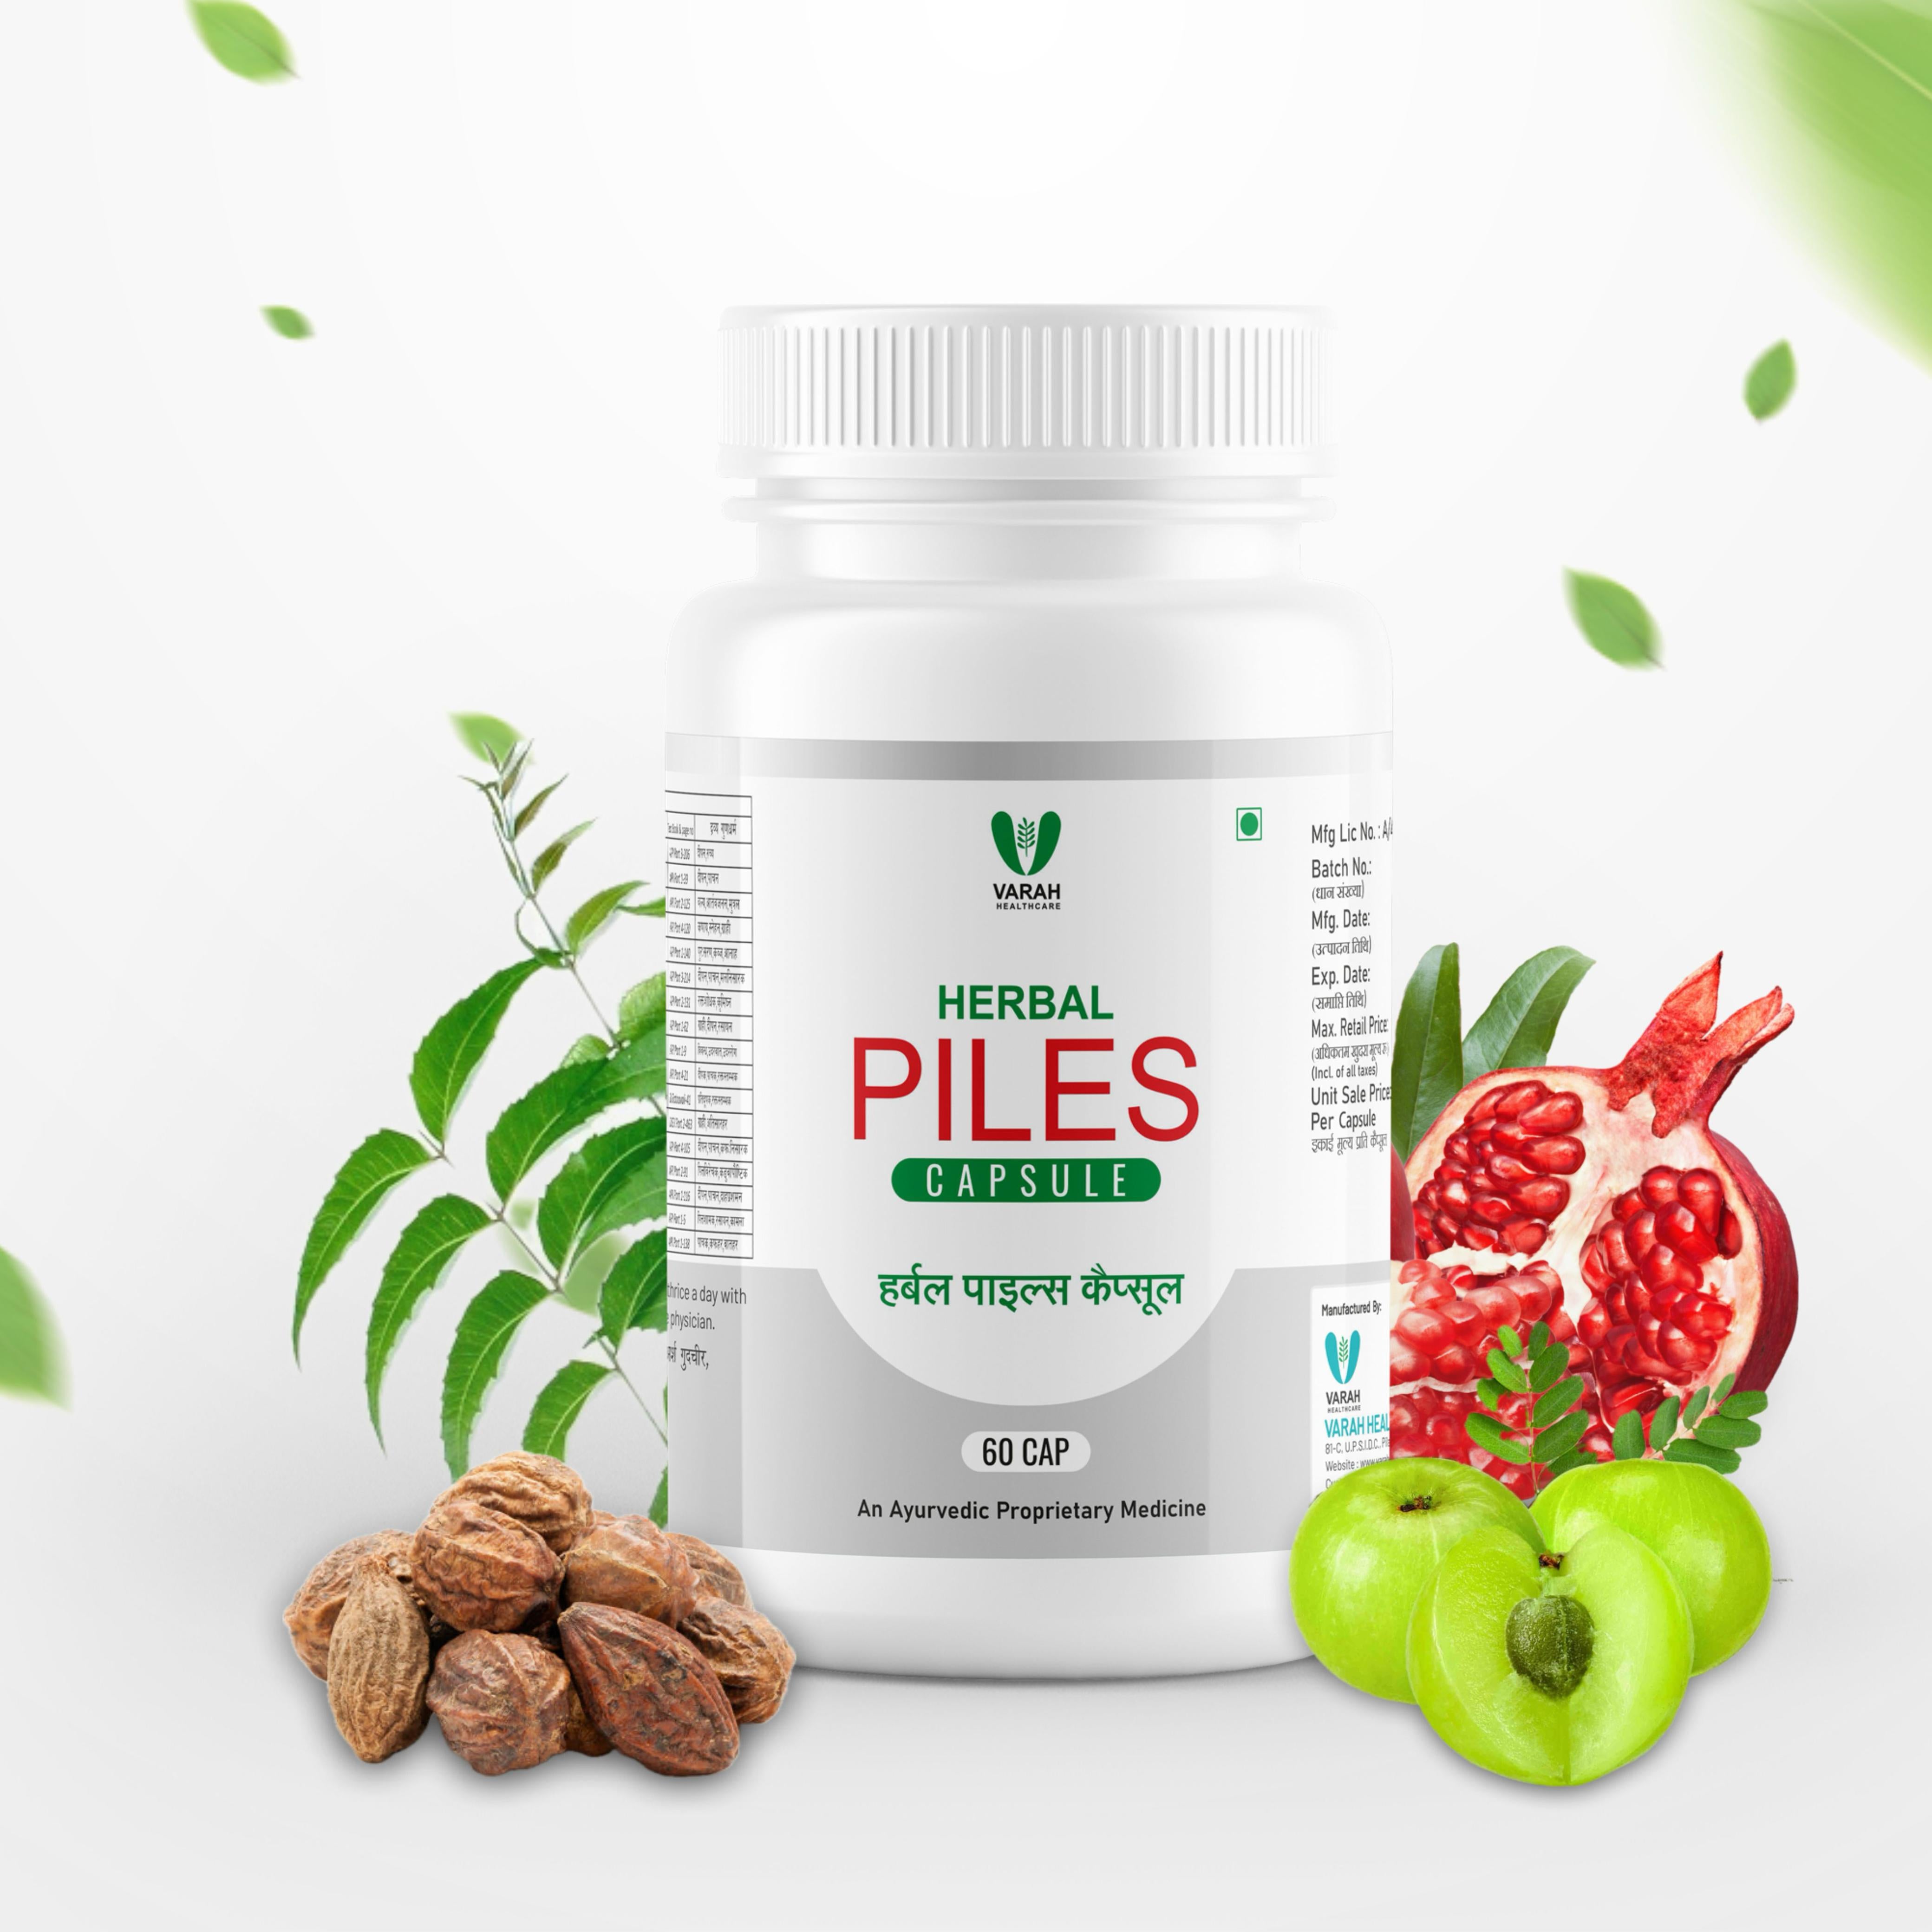 Piles Herbal Capsules  Natural Relief for Hemorrhoids Bottle of 30 Capsule